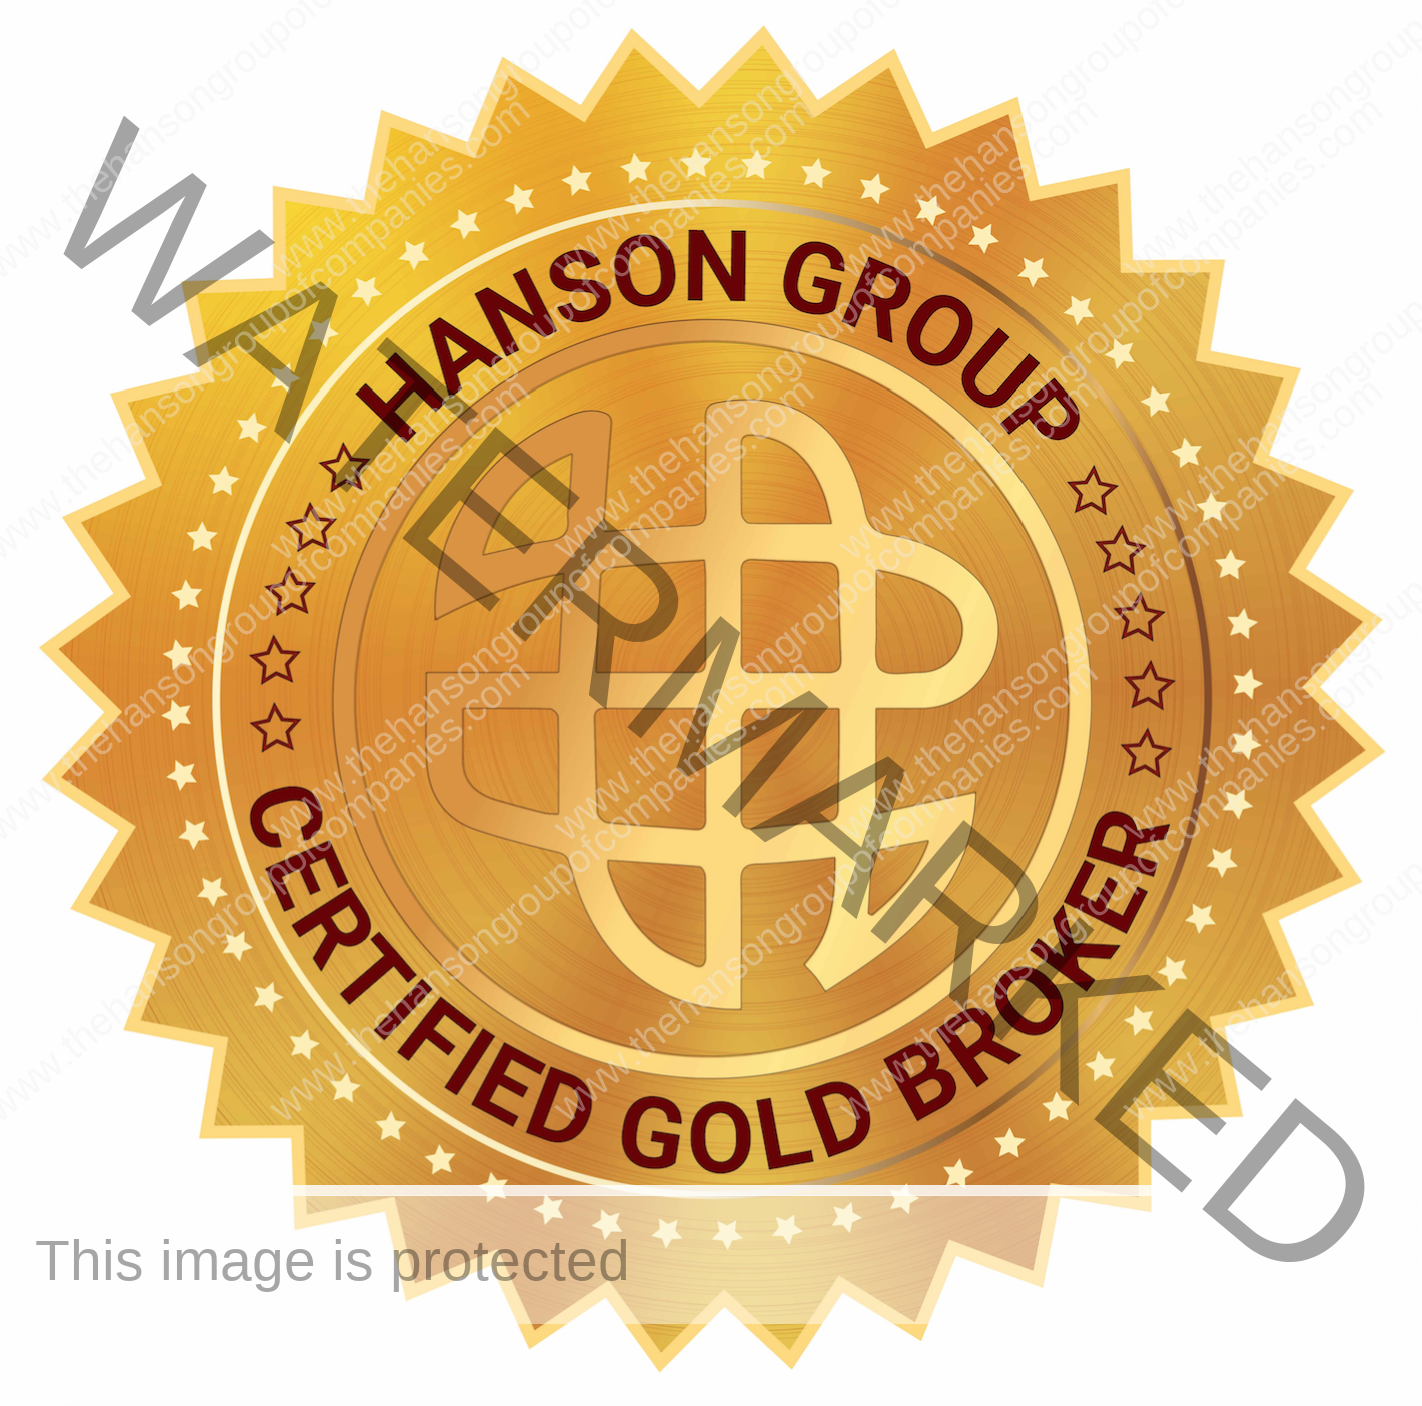 Hanson Group Gold Broker Seal